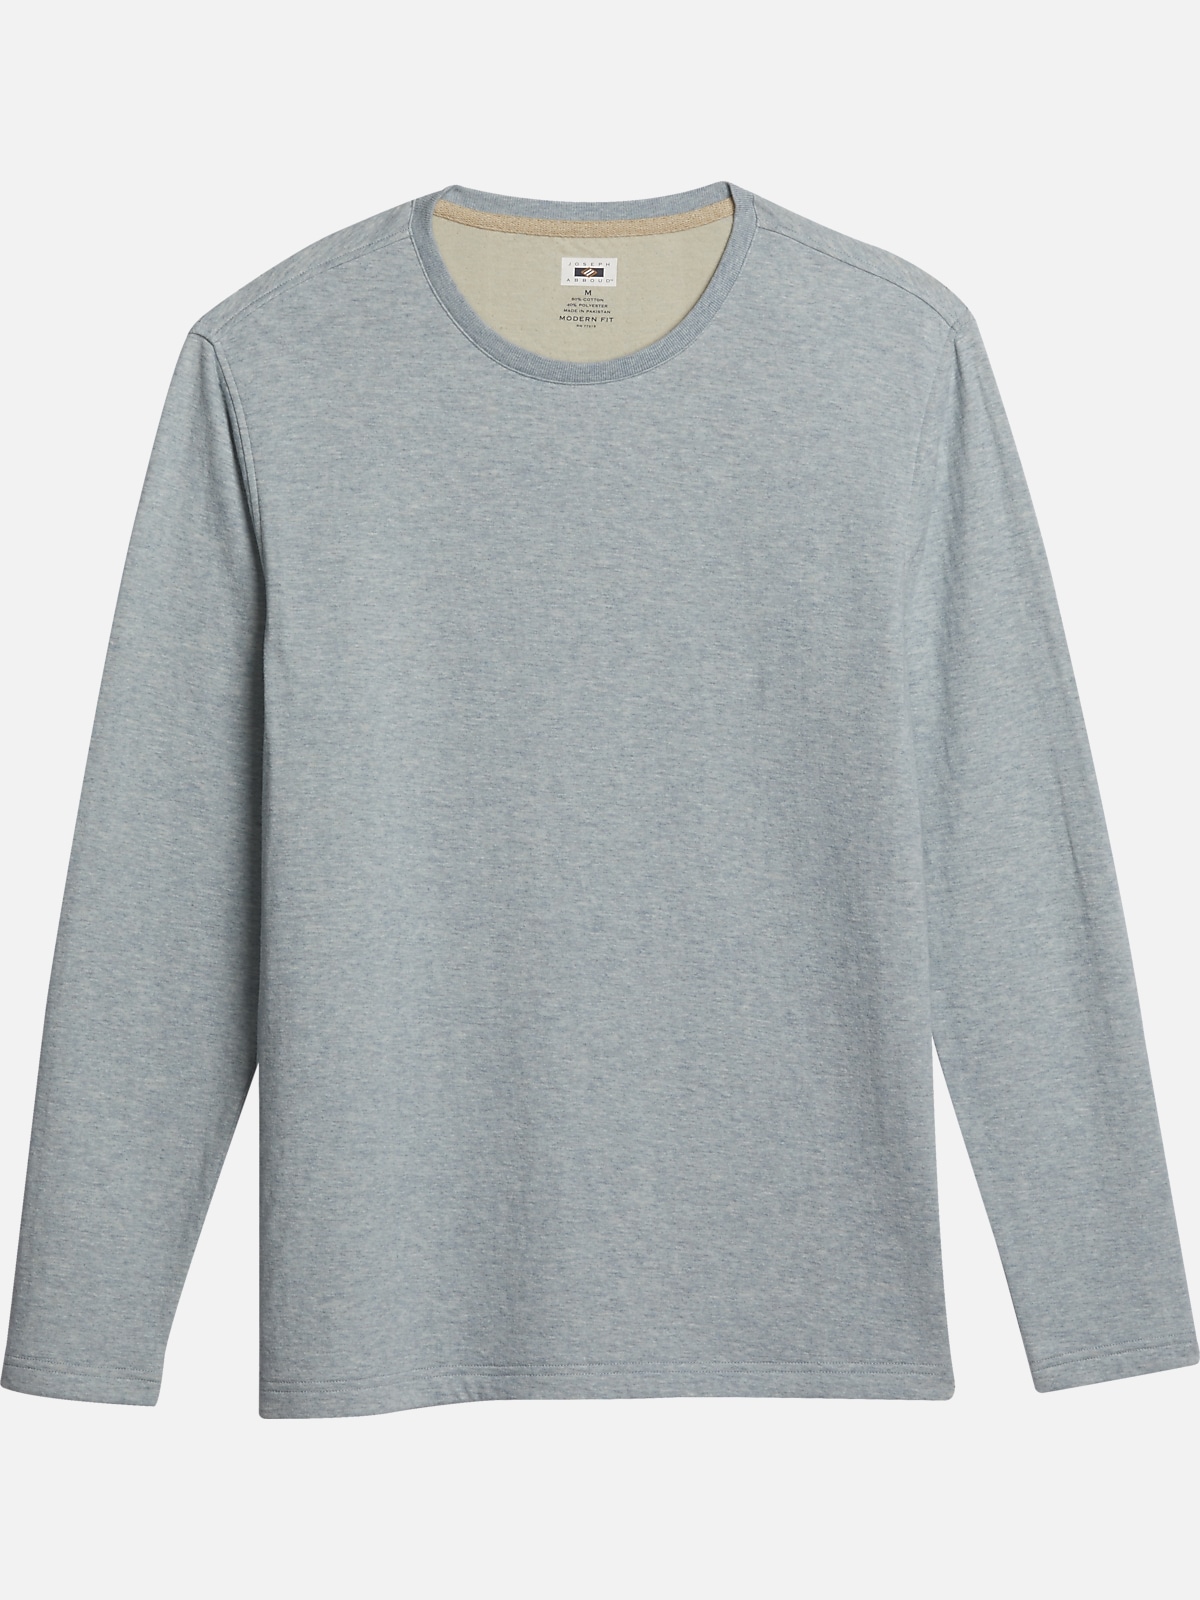 Joseph Abboud Modern Fit Long Sleeve T-Shirt | All Clearance $39.99 ...